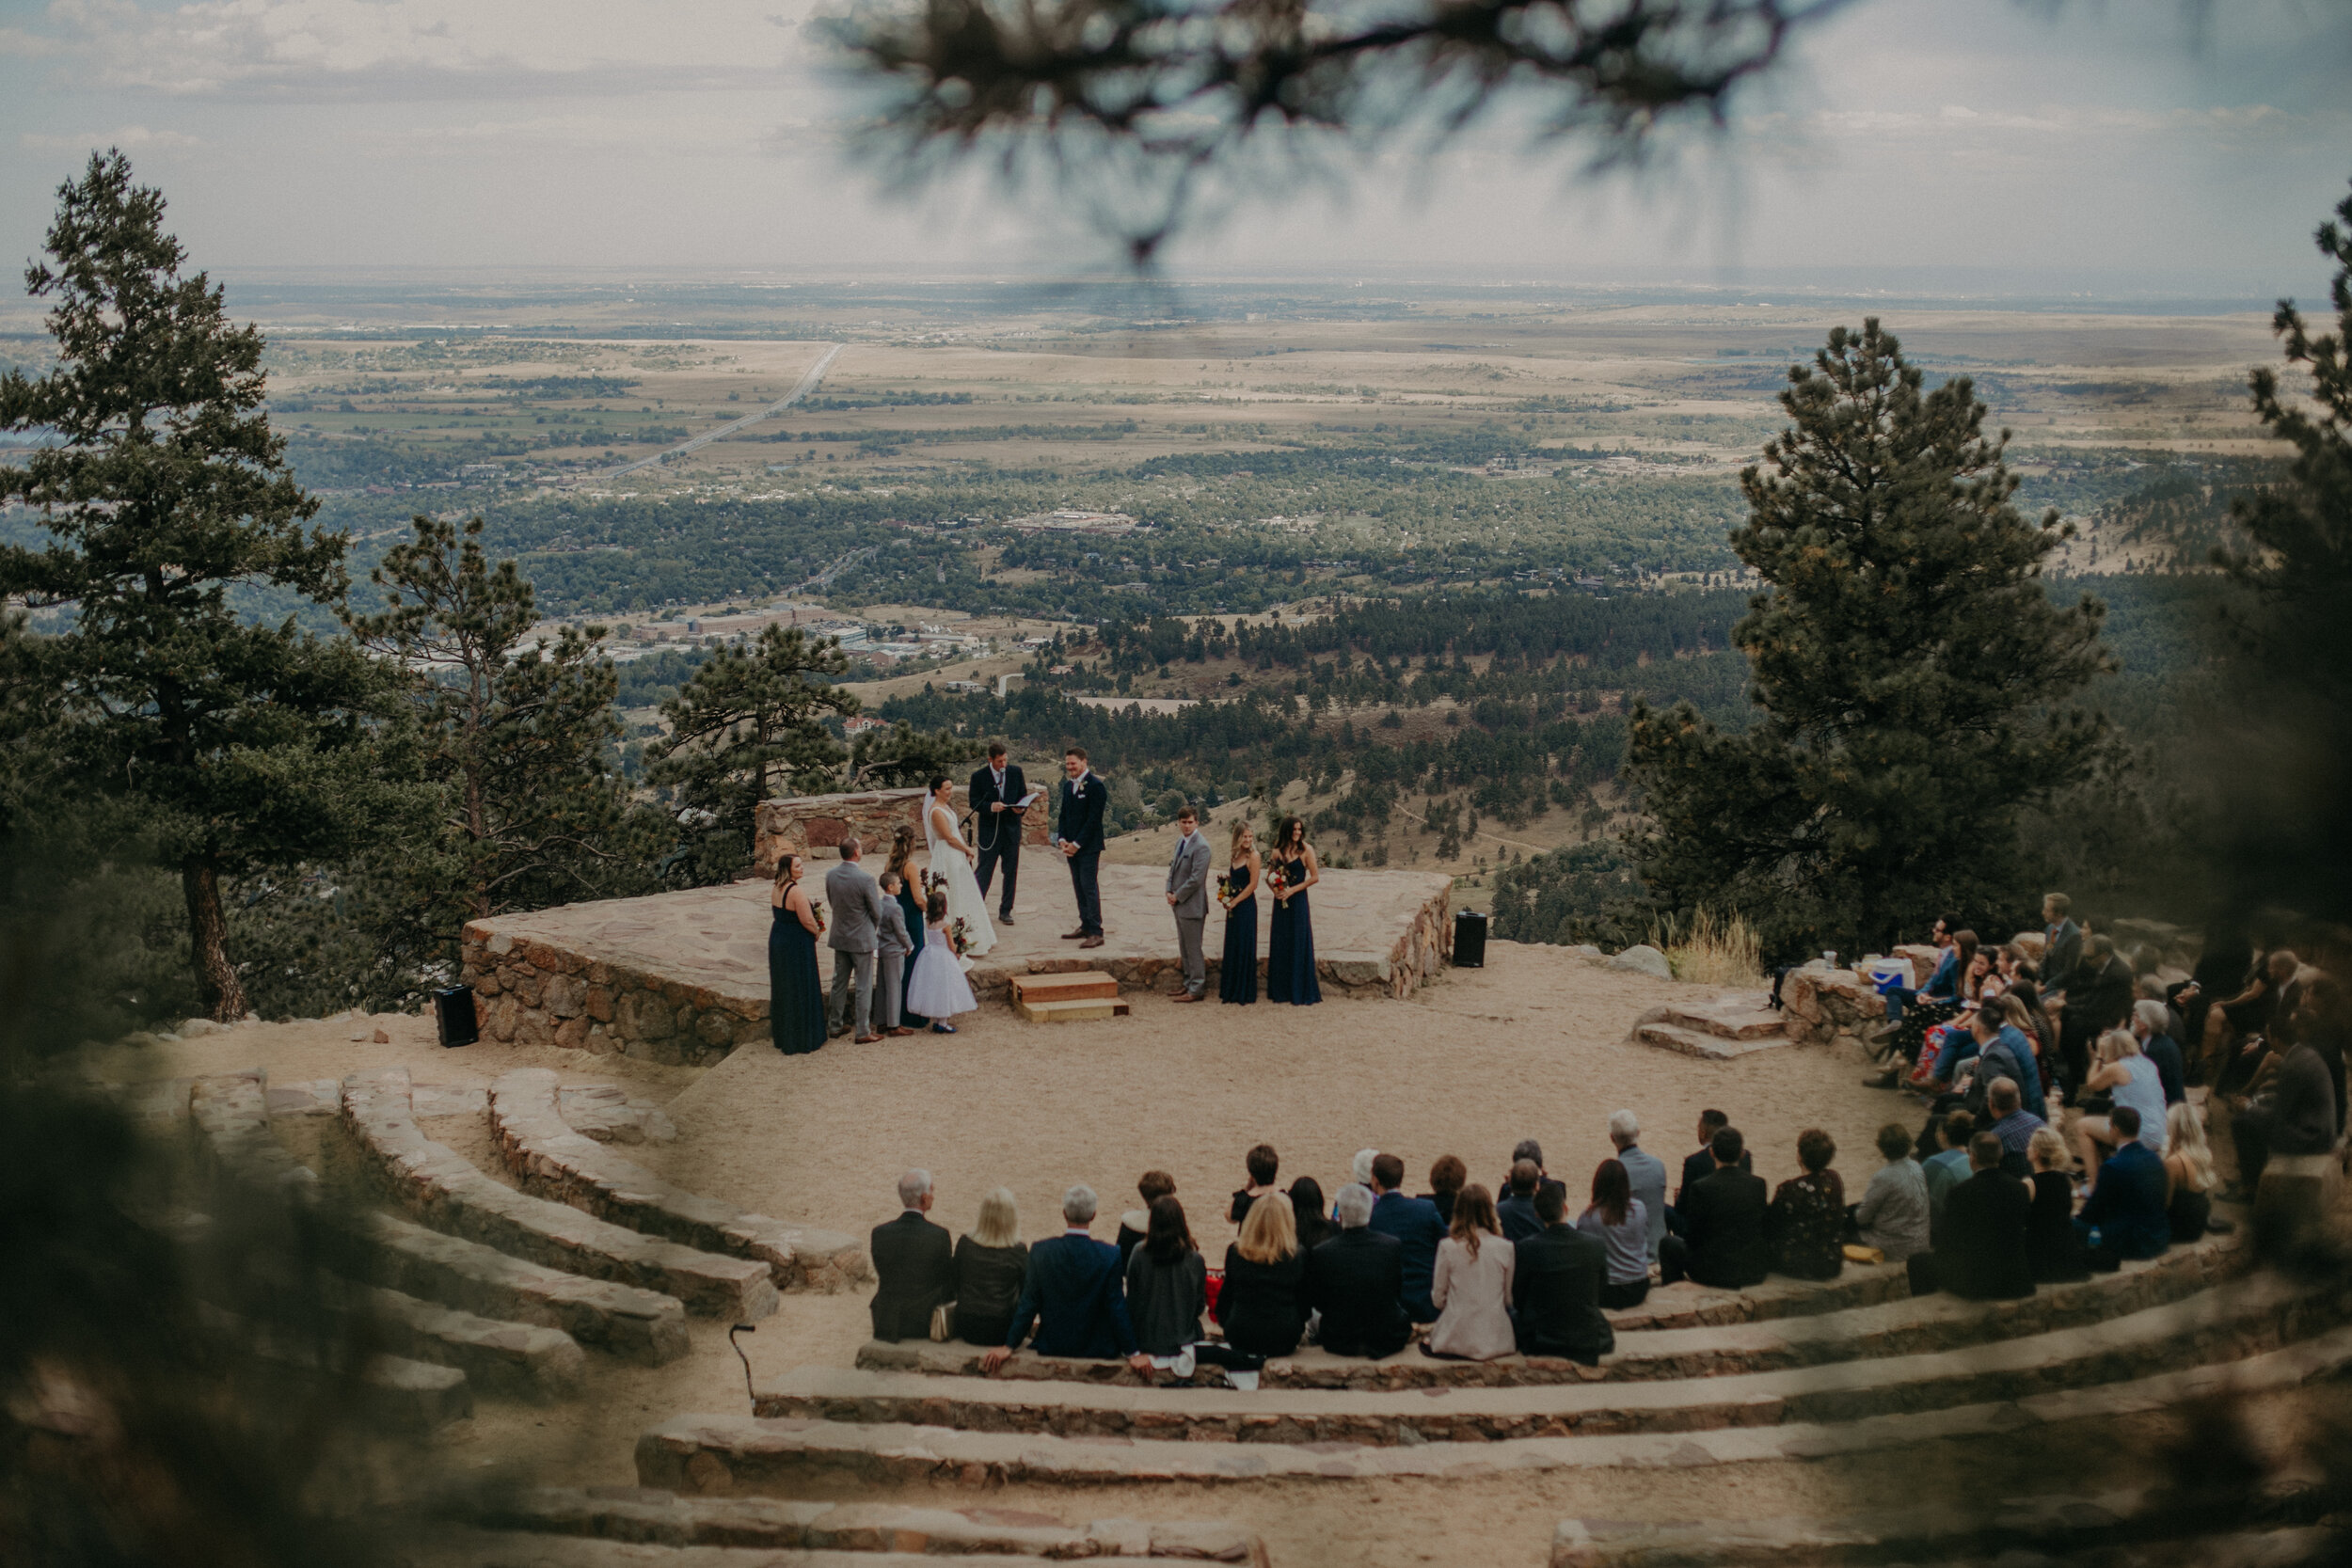  Flagstaff Mountain Sunrise Amphitheater makes for a wonderful wedding ceremony location  